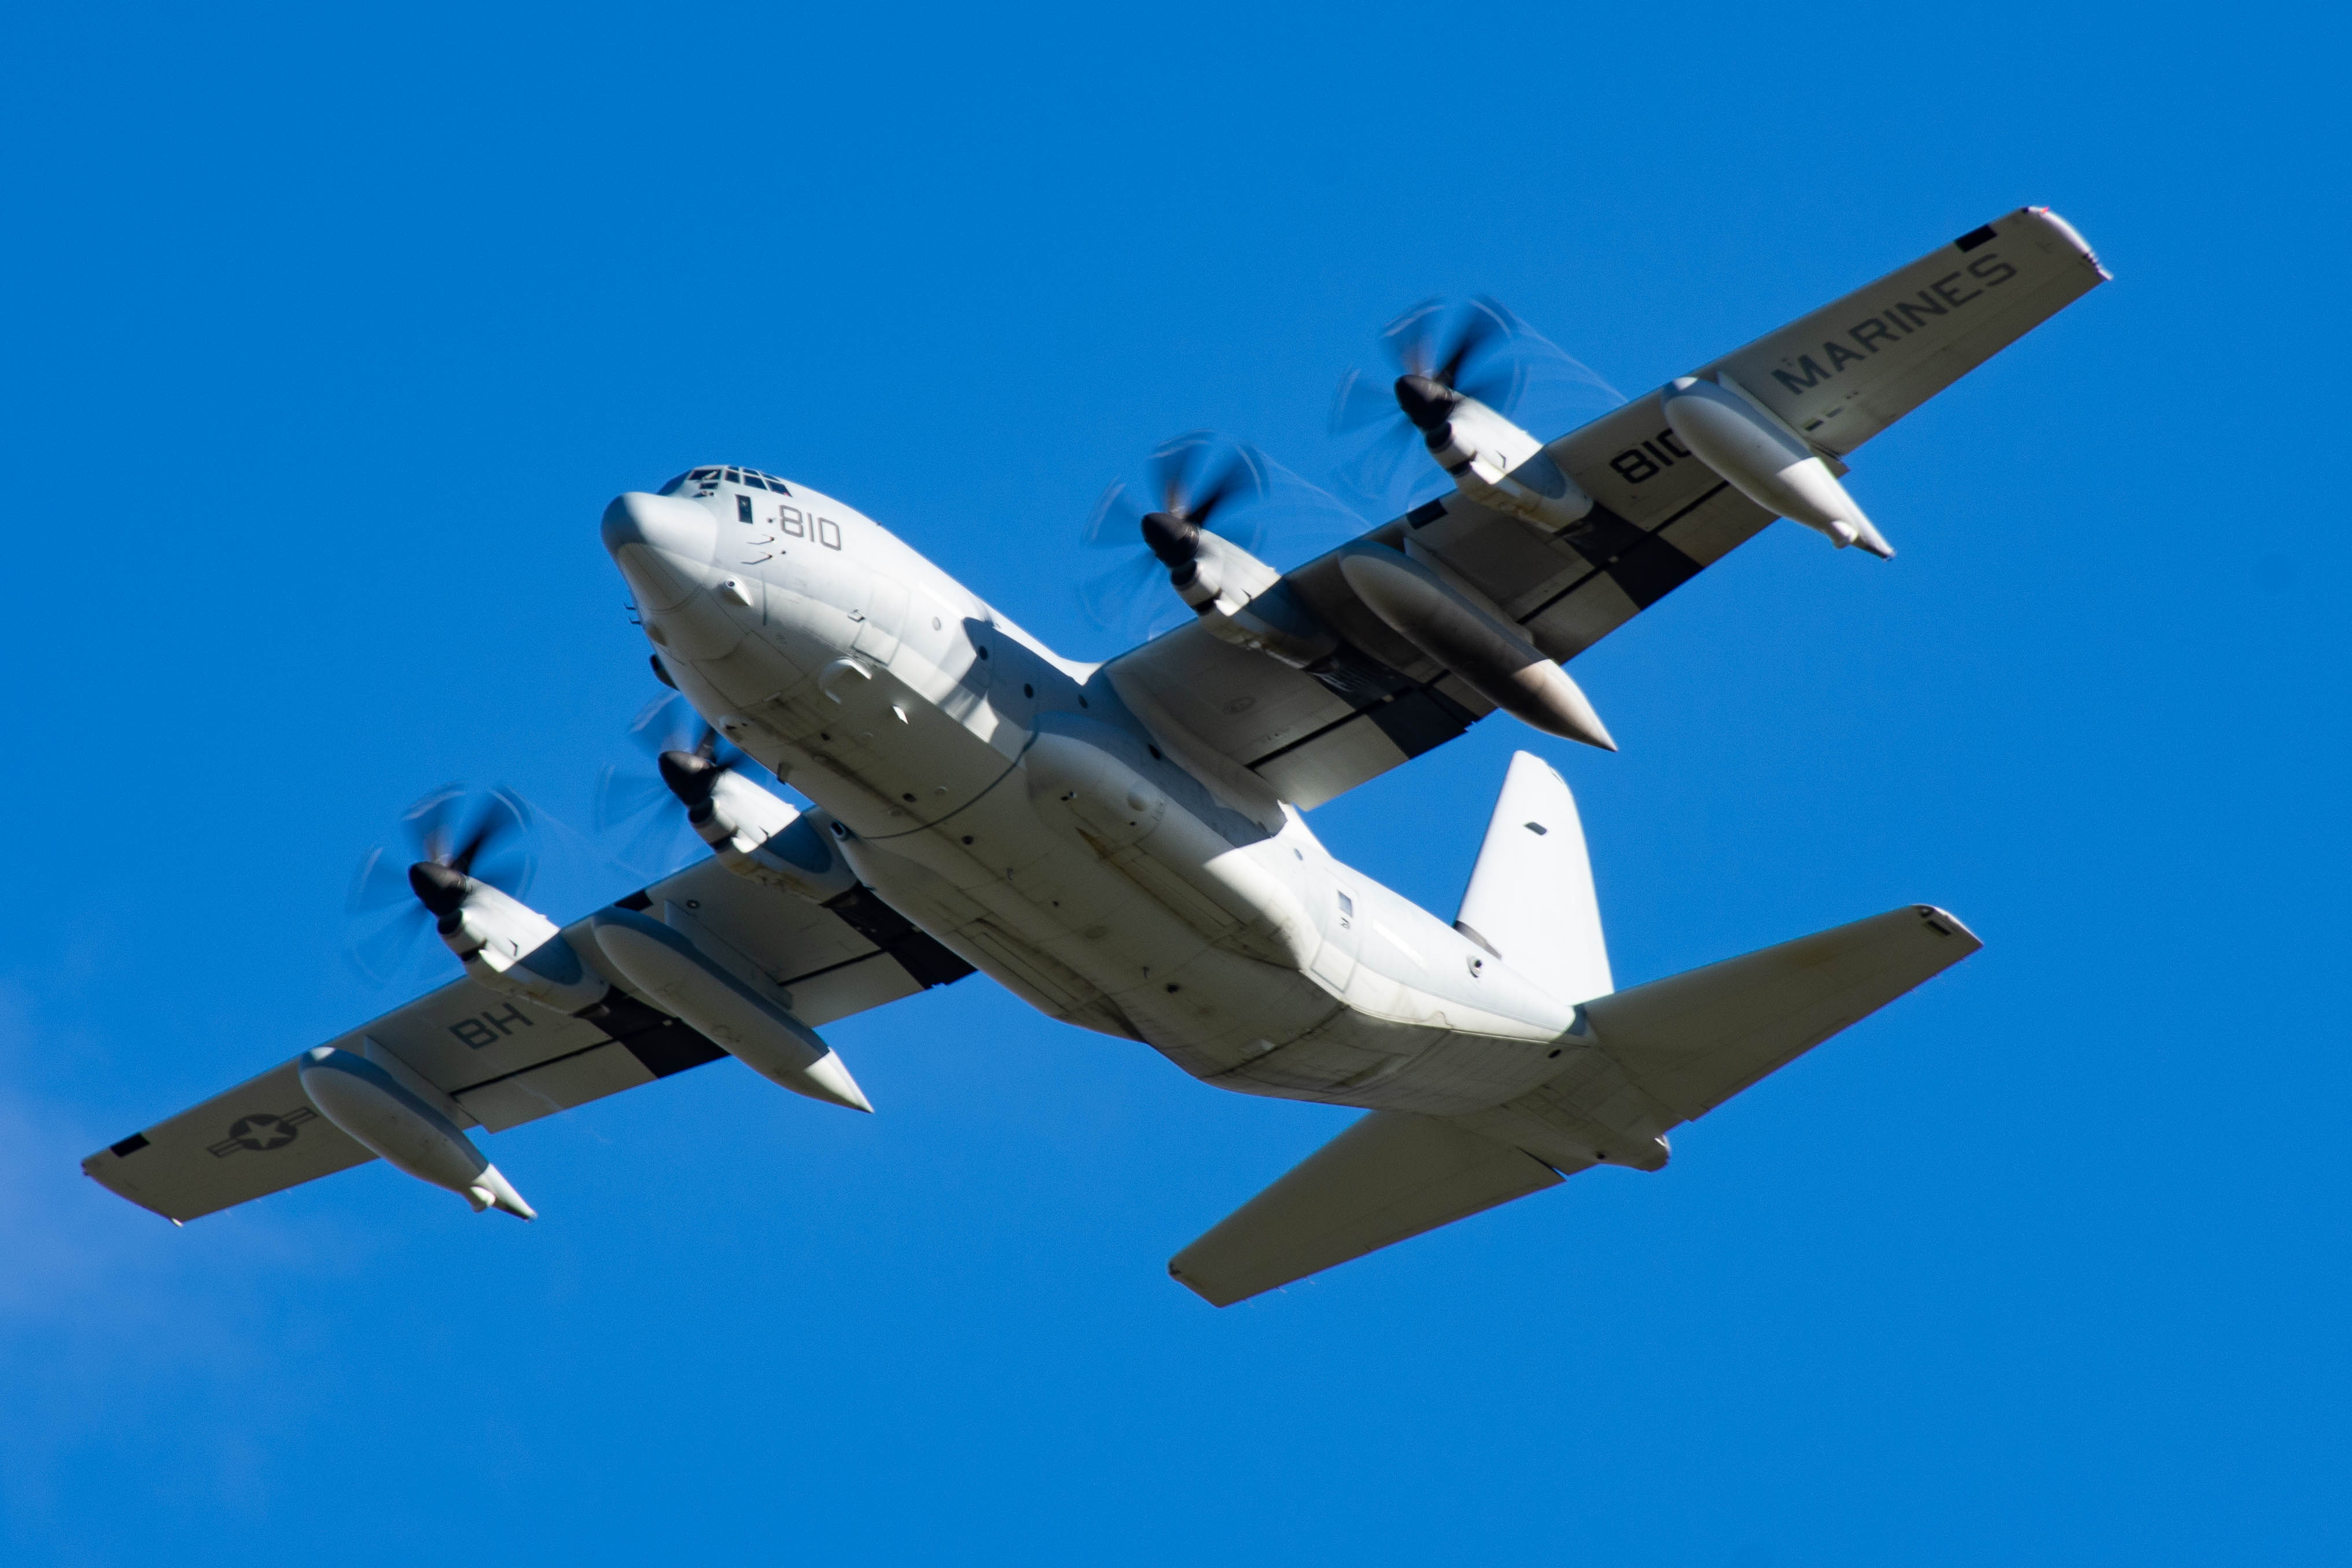 165810/165810 USMC - United States Marine Corps Lockheed C-130 Hercules Airframe Information - AVSpotters.com